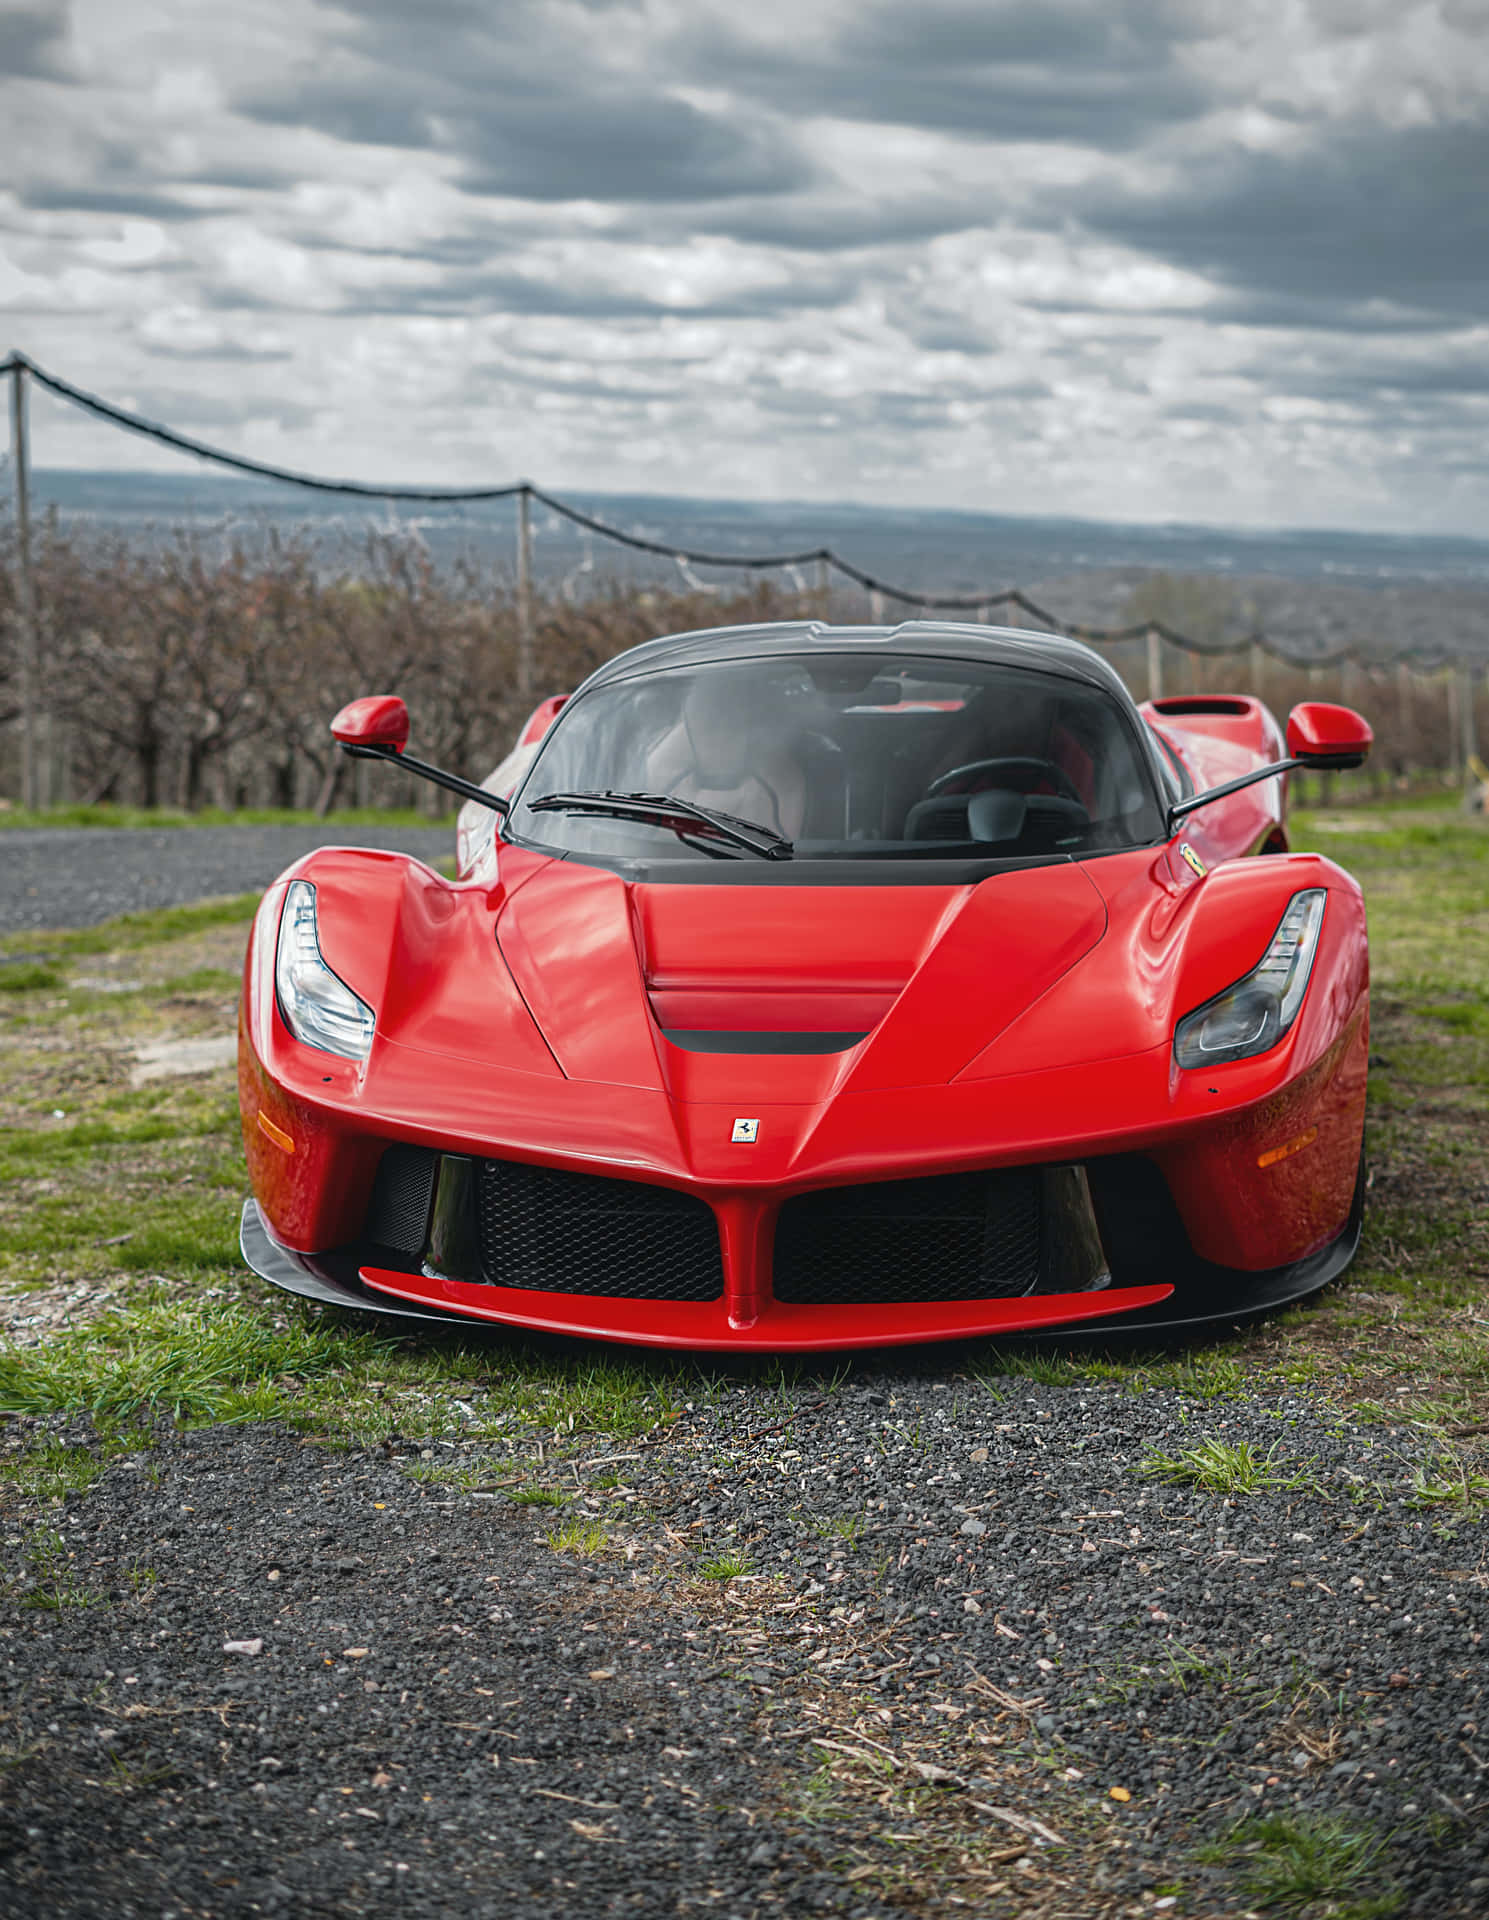 Stunning Ferrari Racing Across A Windy Road